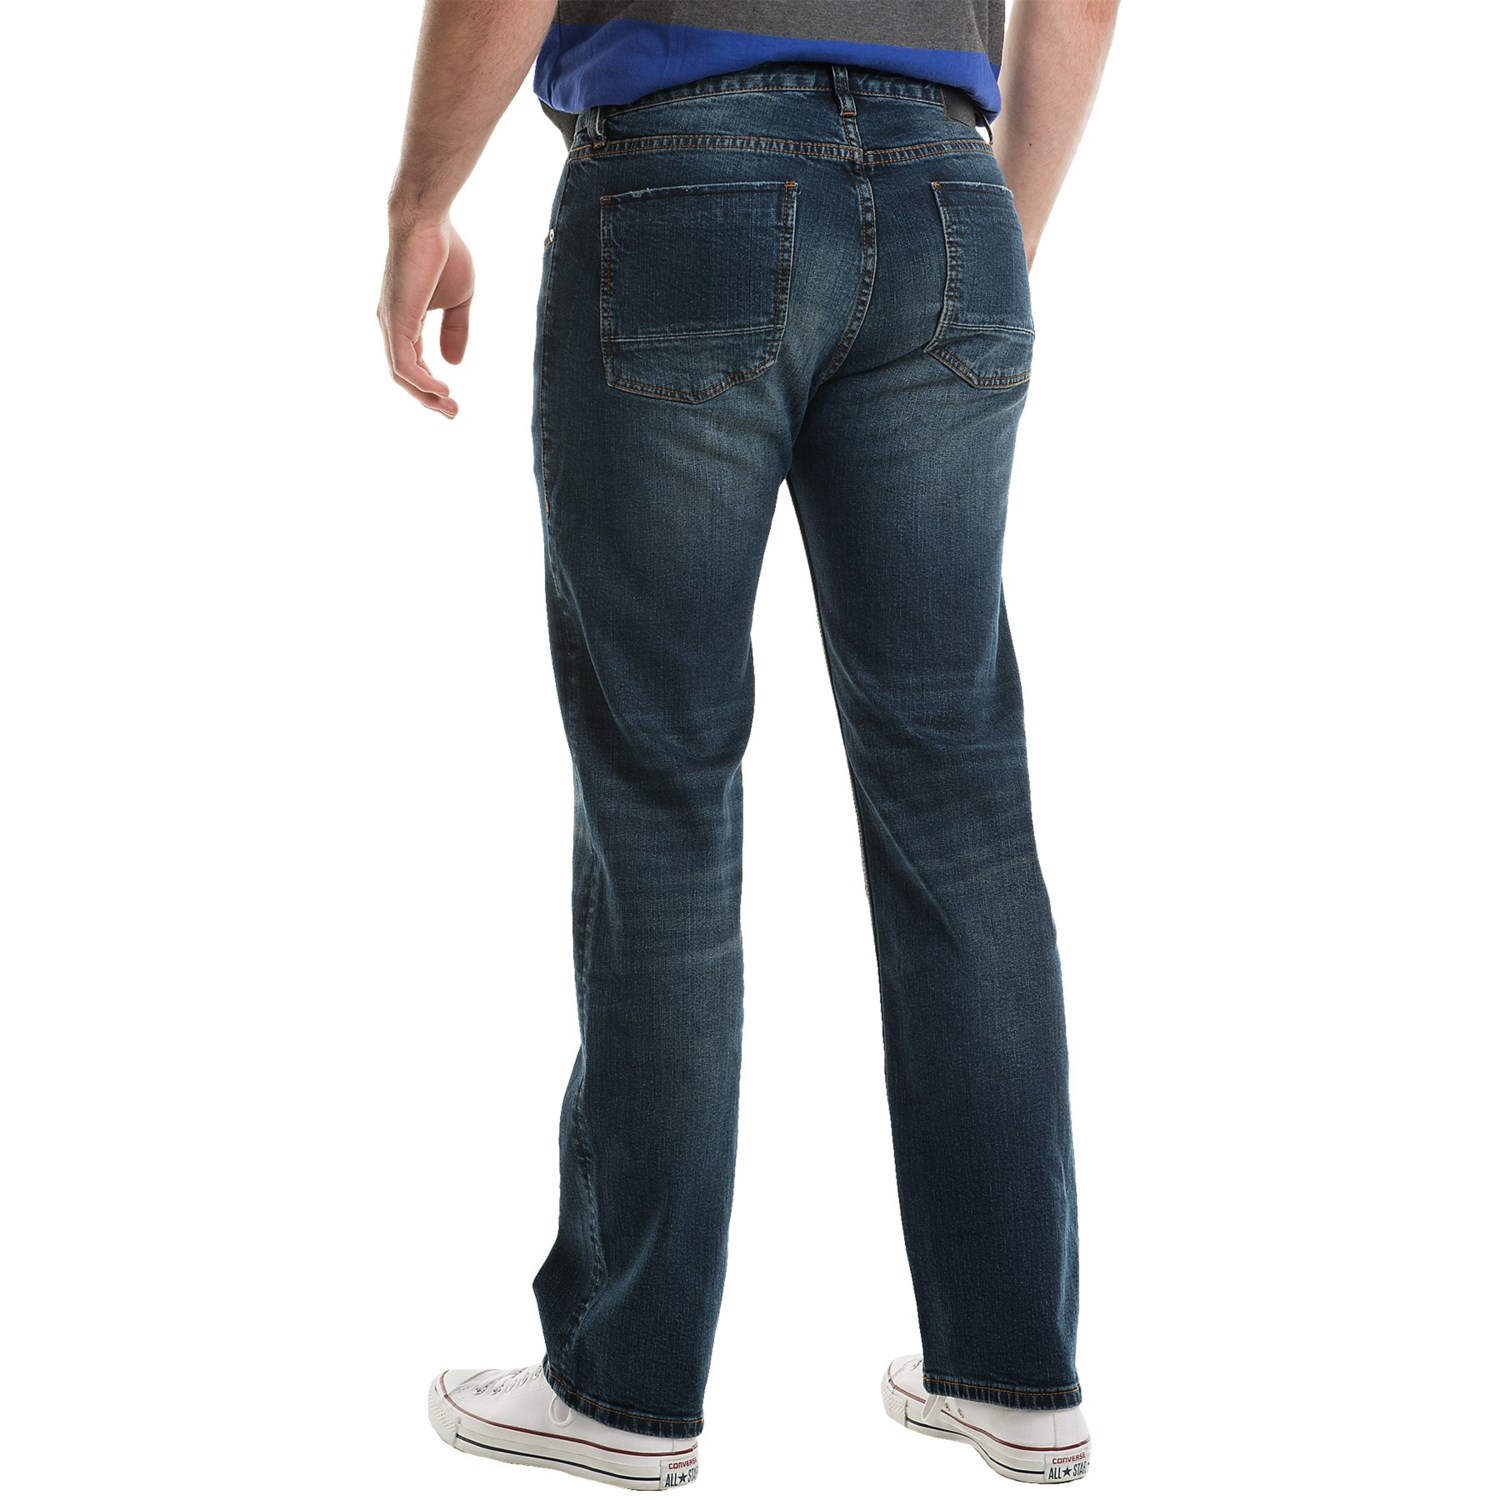 Slate Denim & Co. Coltrane Classic Jeans (For Men) - Save 77%